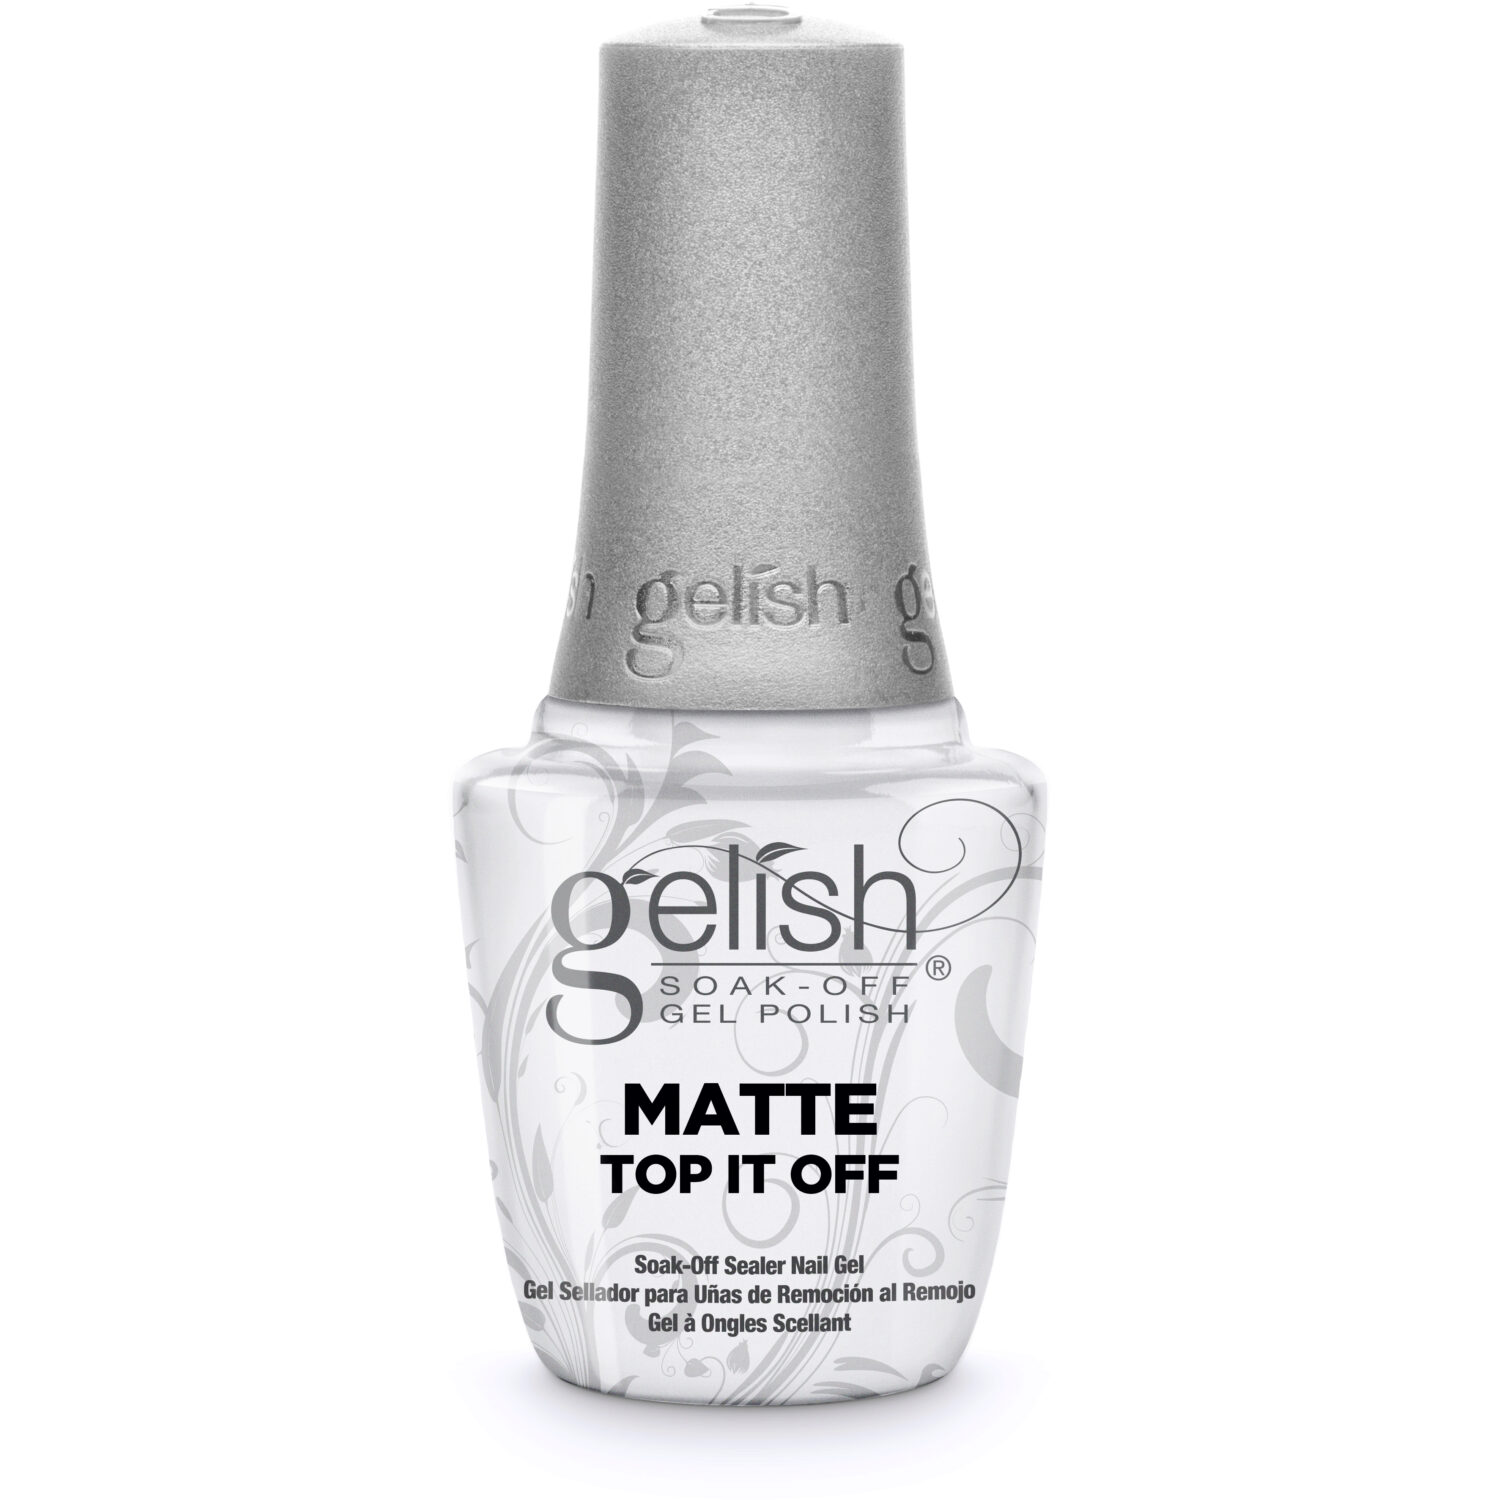 Gelish Matter Top It Off Soak-Off Sealer Gel